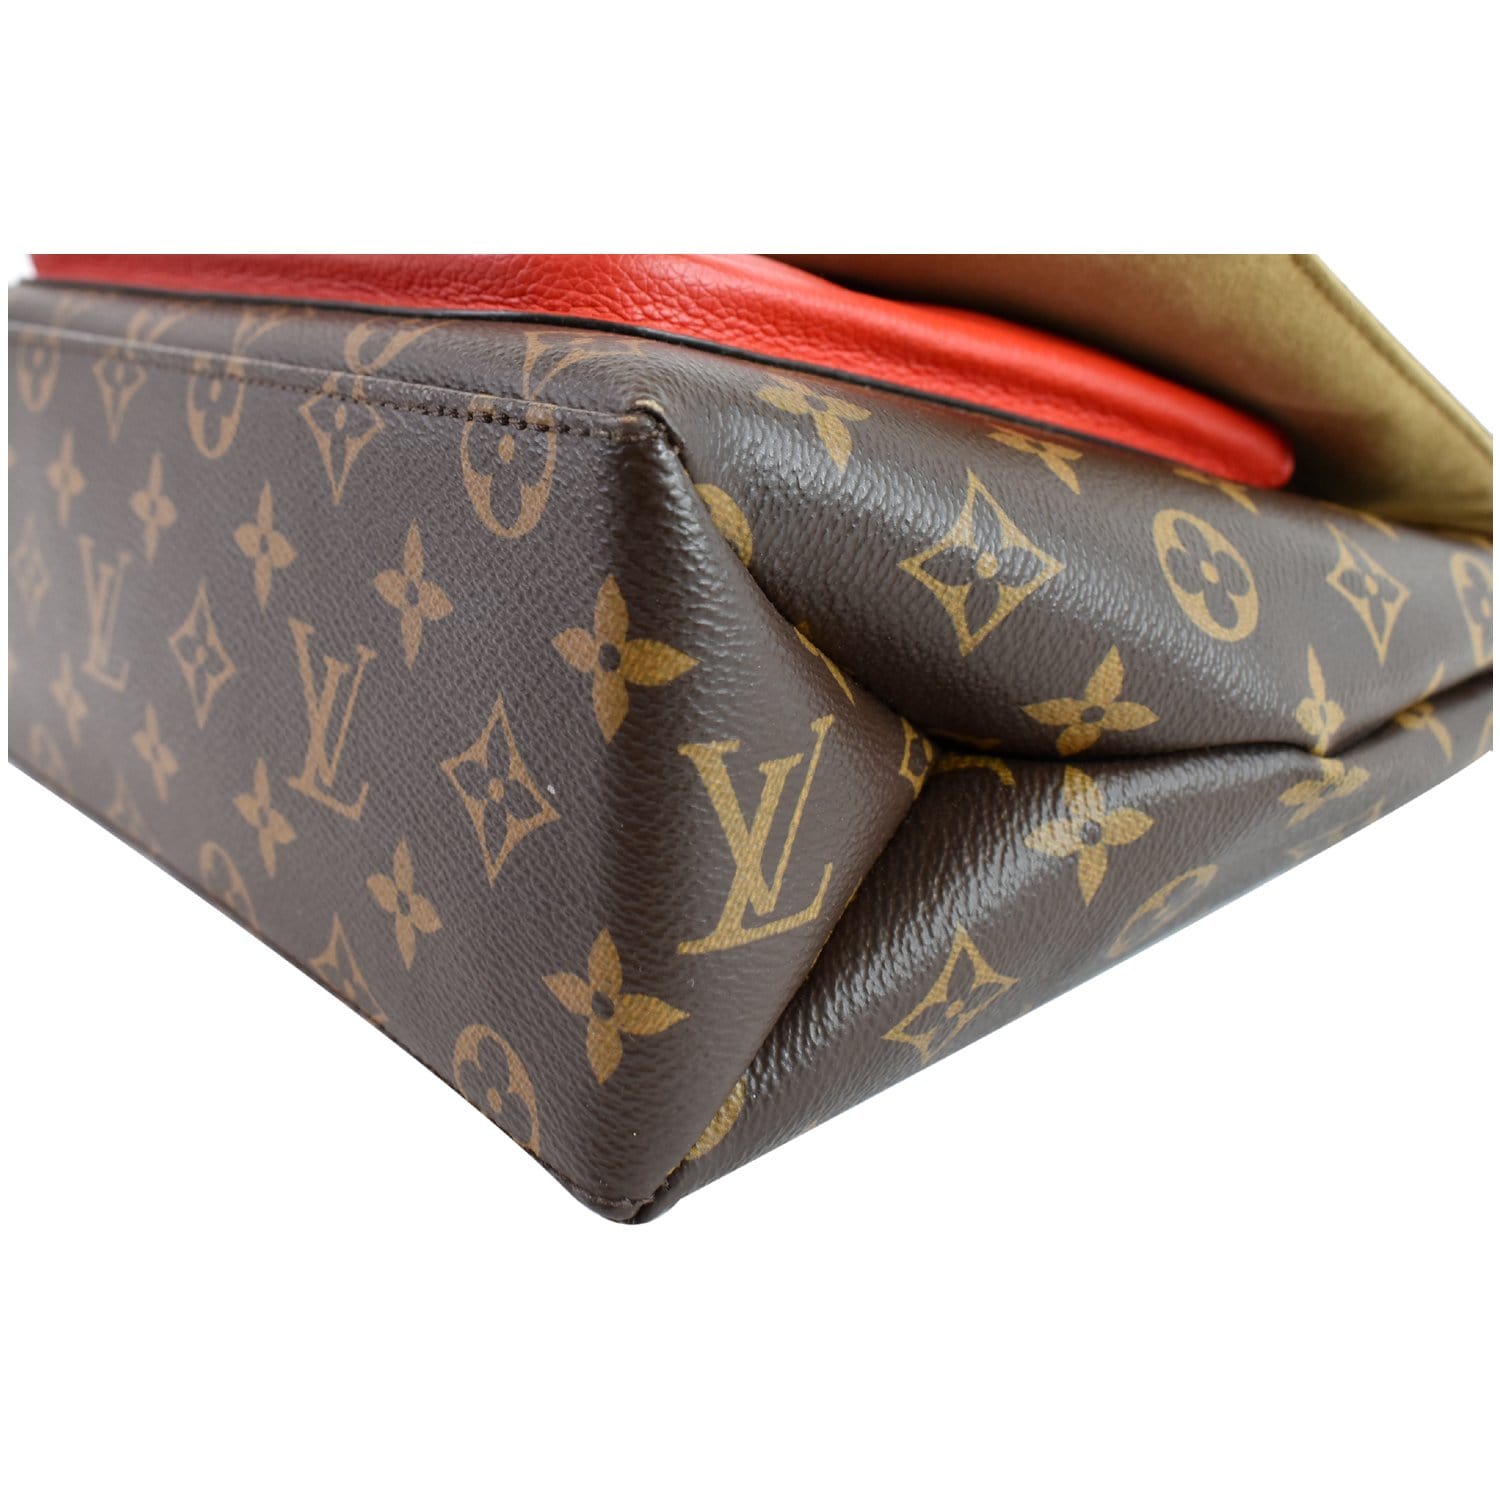 Louis Vuitton Marignan Black Monogram Canvas Shoulder Bag - MyDesignerly